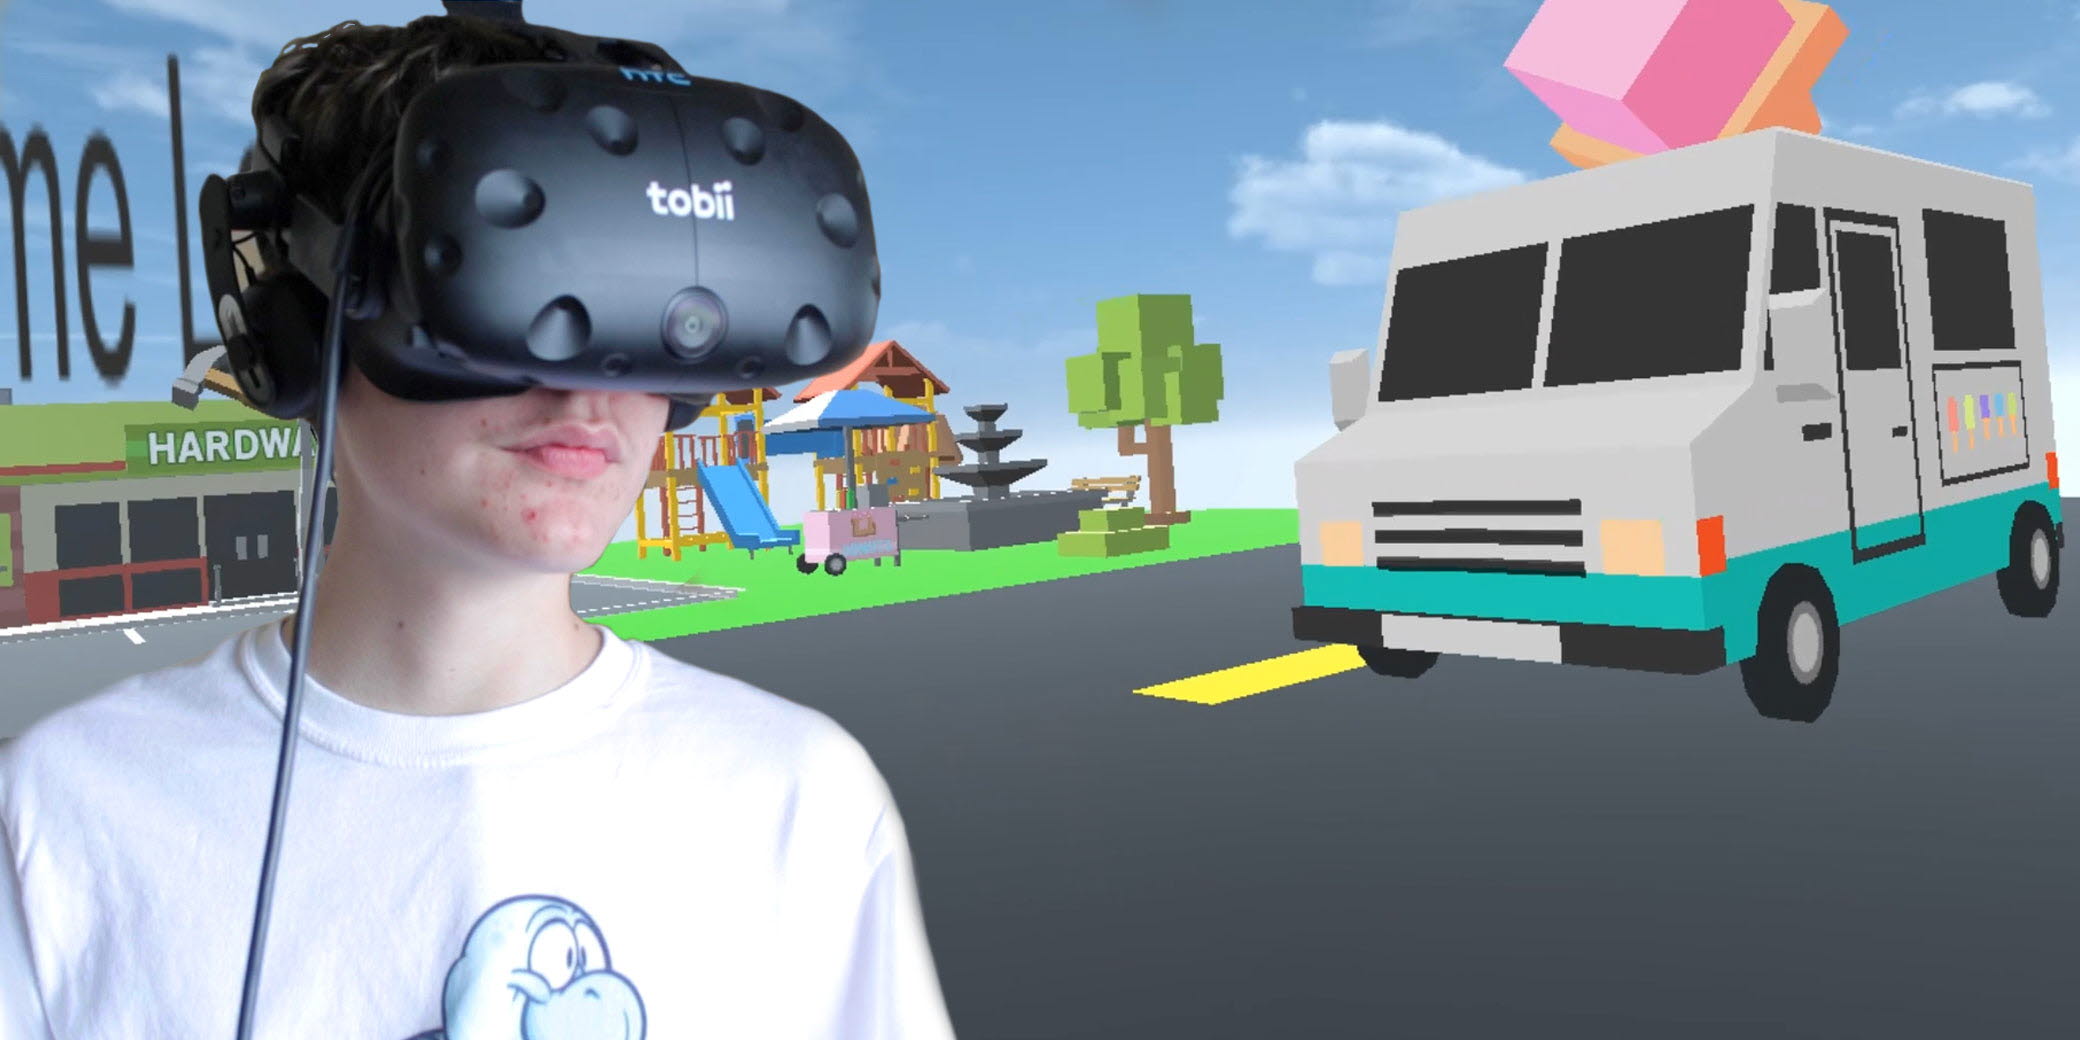 VR eye tracking headset Tobii Pro